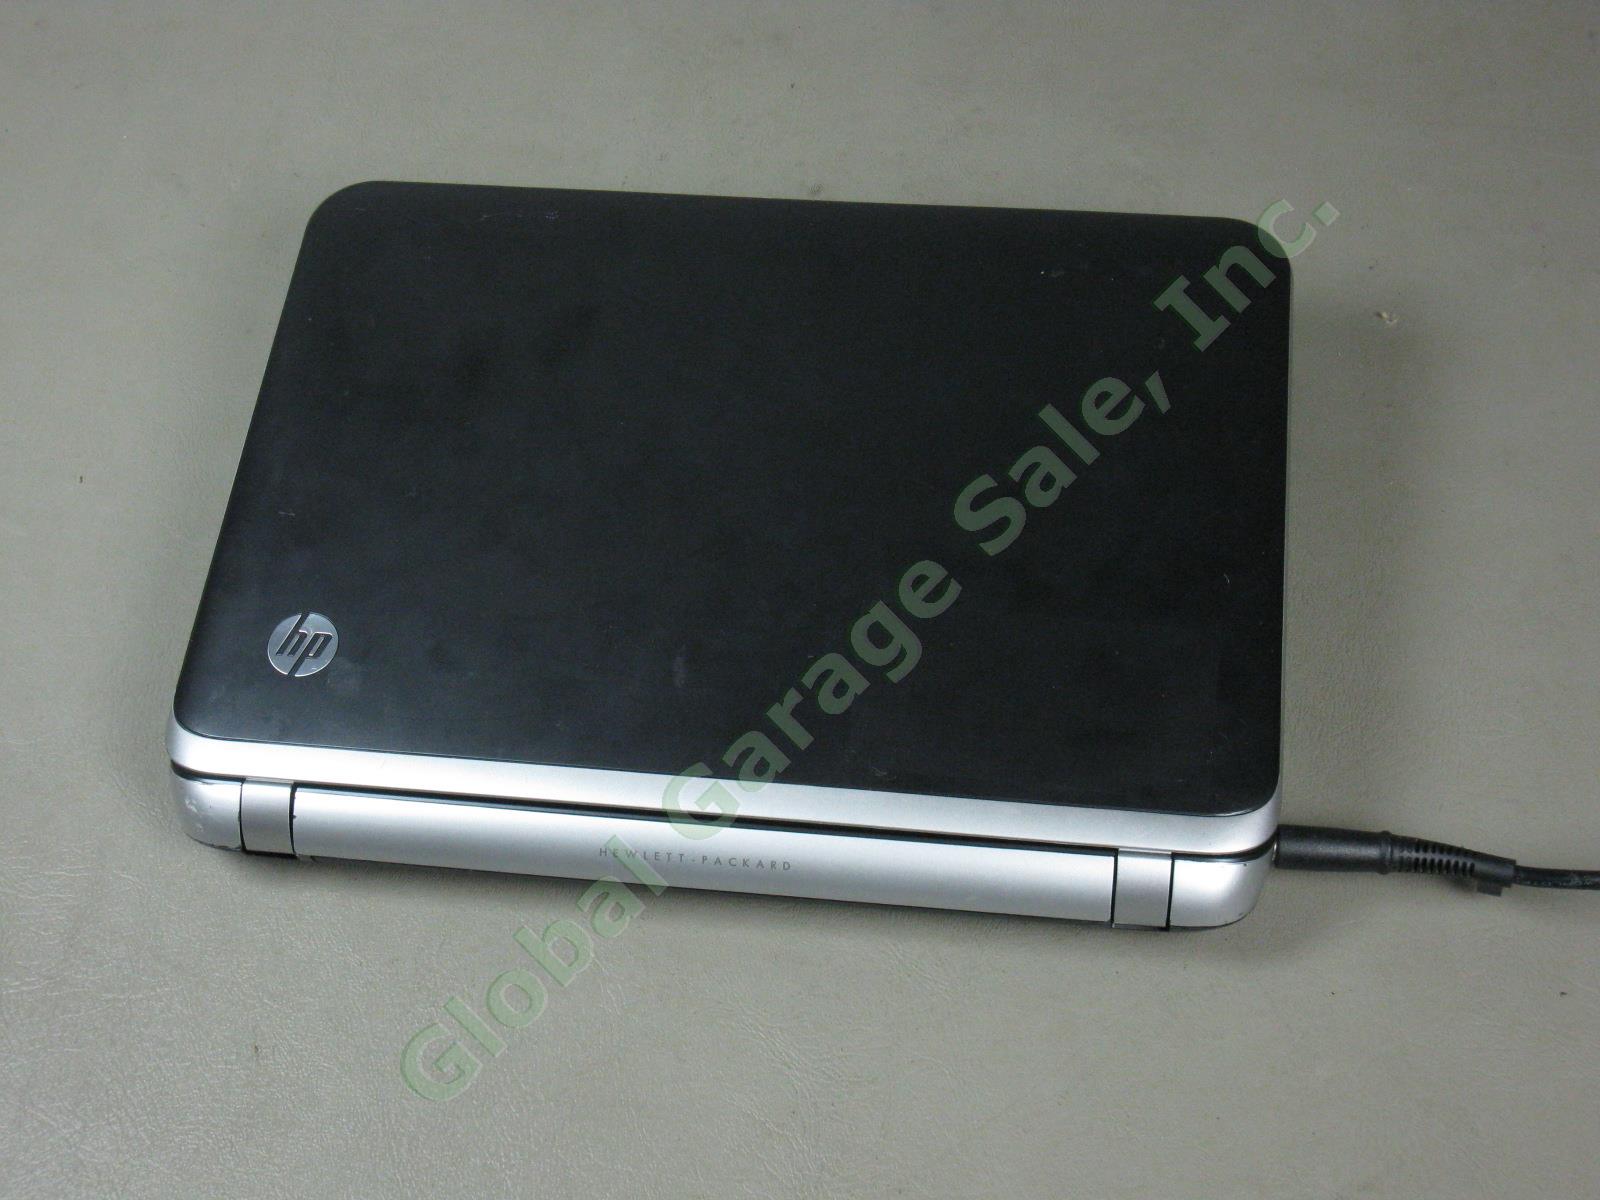 HP 3115m Notebook Laptop AMD E-450 1.65GHz 4GB 320GB Win 7 Ult 64 Bit Beats Aud 3